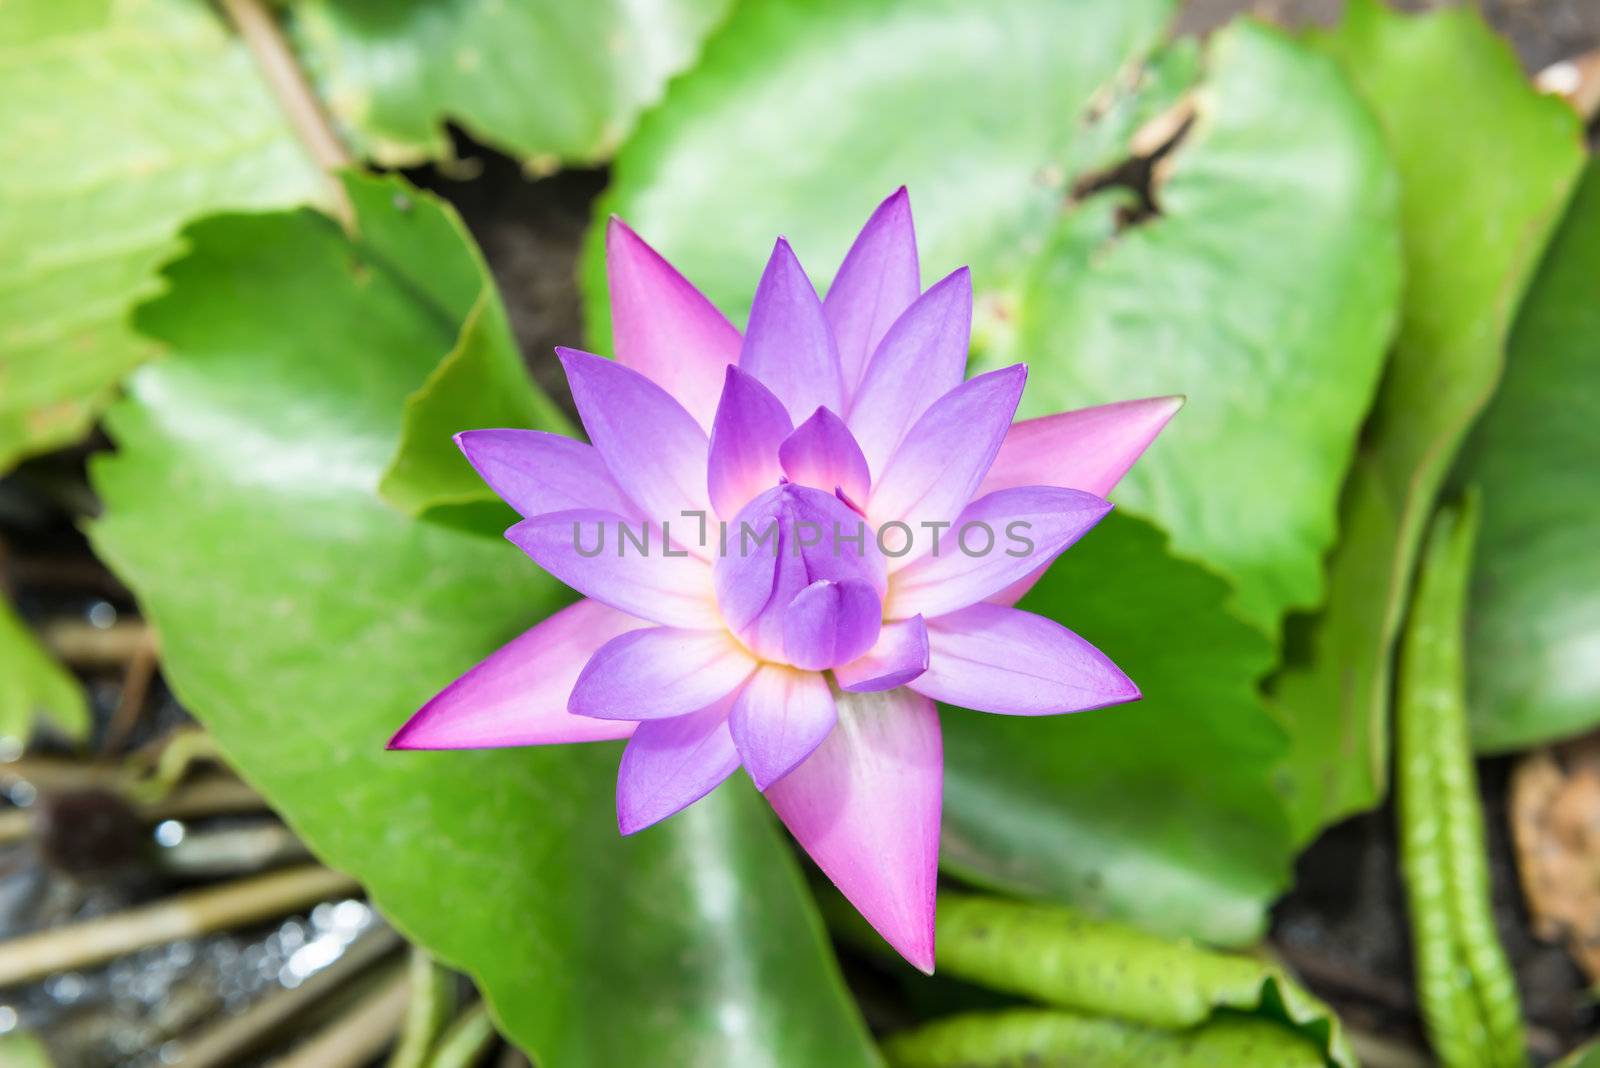 Waterlily or lotus flower at daytime by wmitrmatr